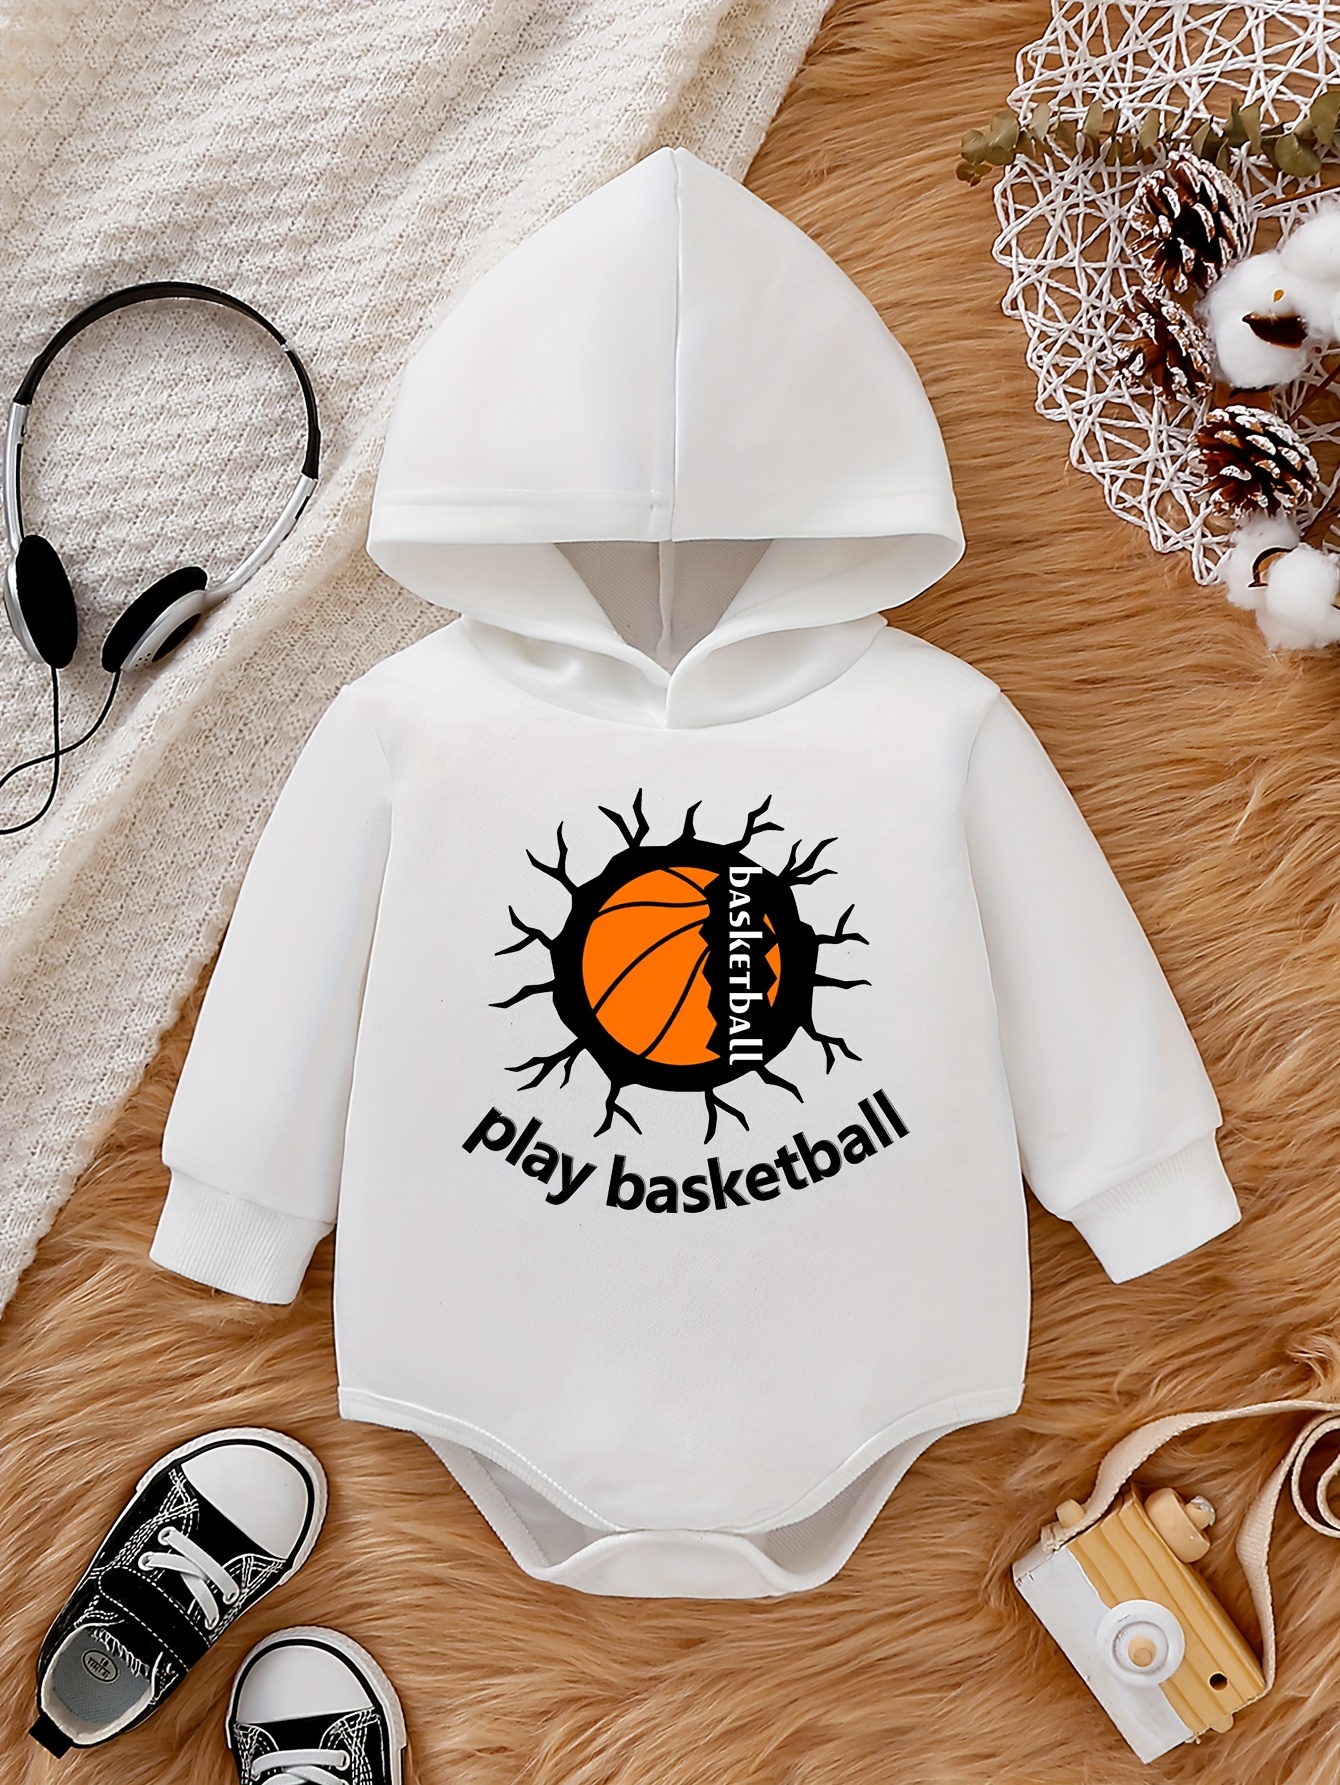 Buy Baby Jersey Basketball online